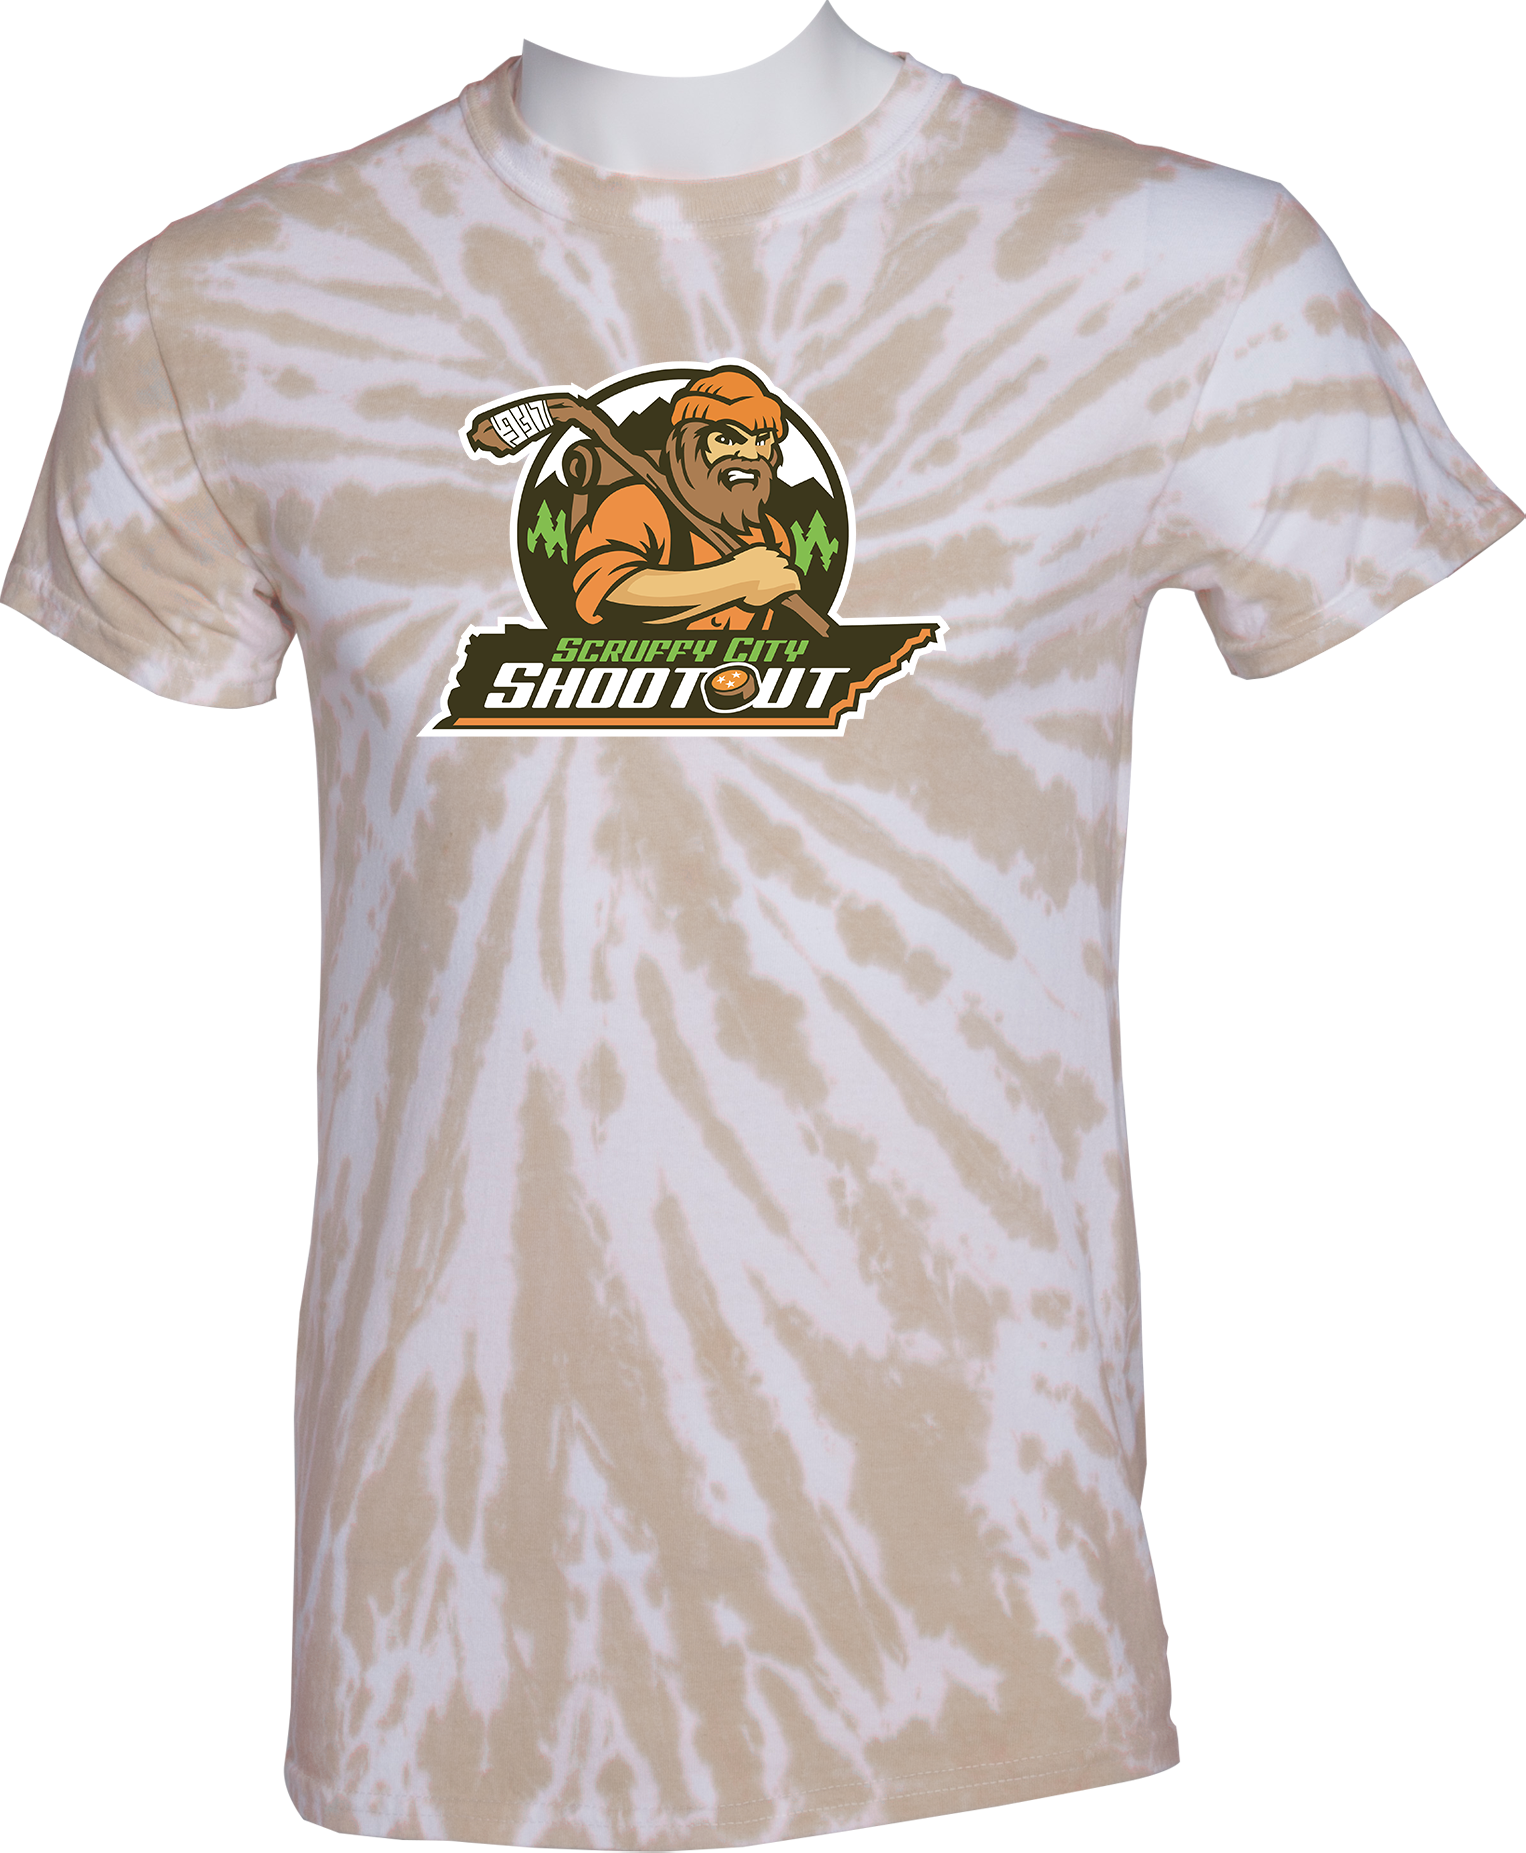 Tie-Dye Short Sleeves - Scruffy City Mite Shootout 2024